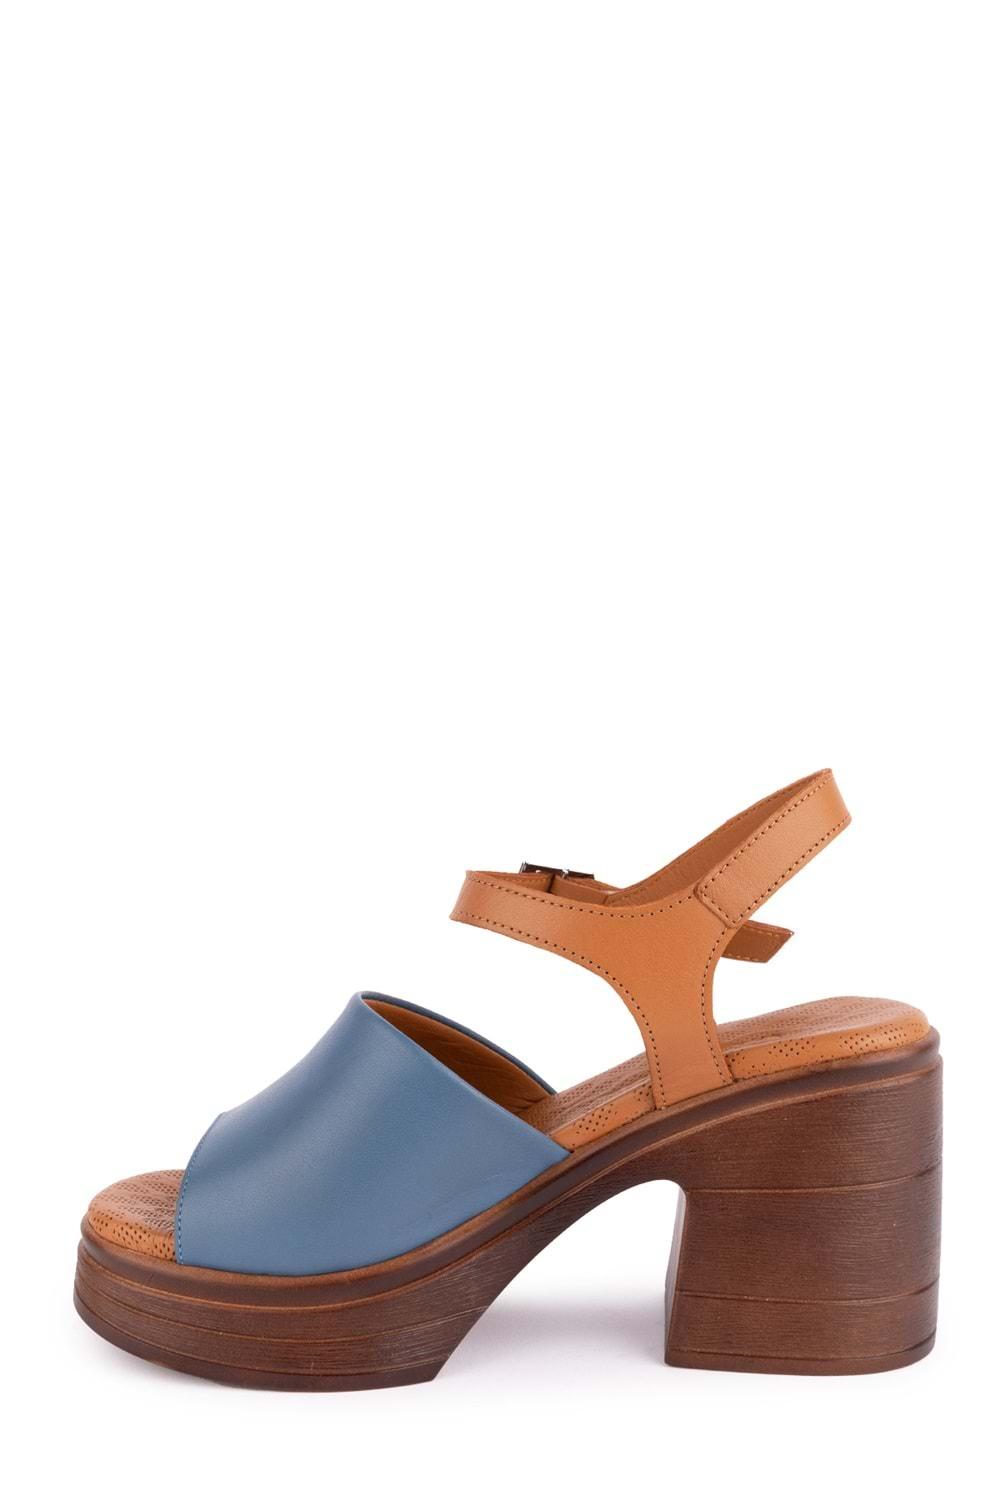 Gondol Kadın Hakiki Deri Platform Topuklu Sandalet msa.34 - Mavi - 40